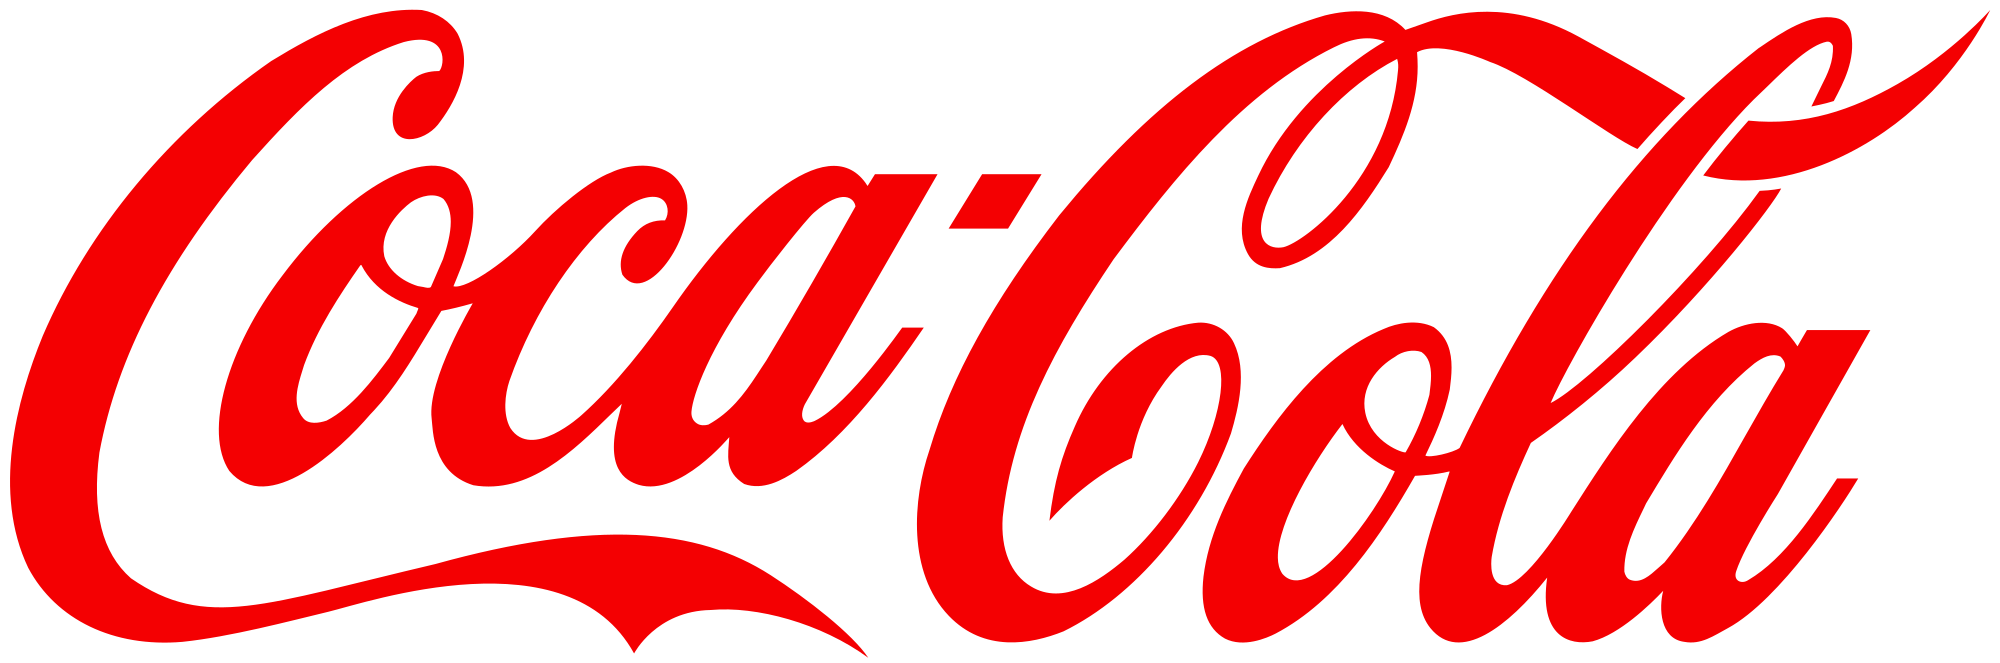 Coca-Cola  wordmark